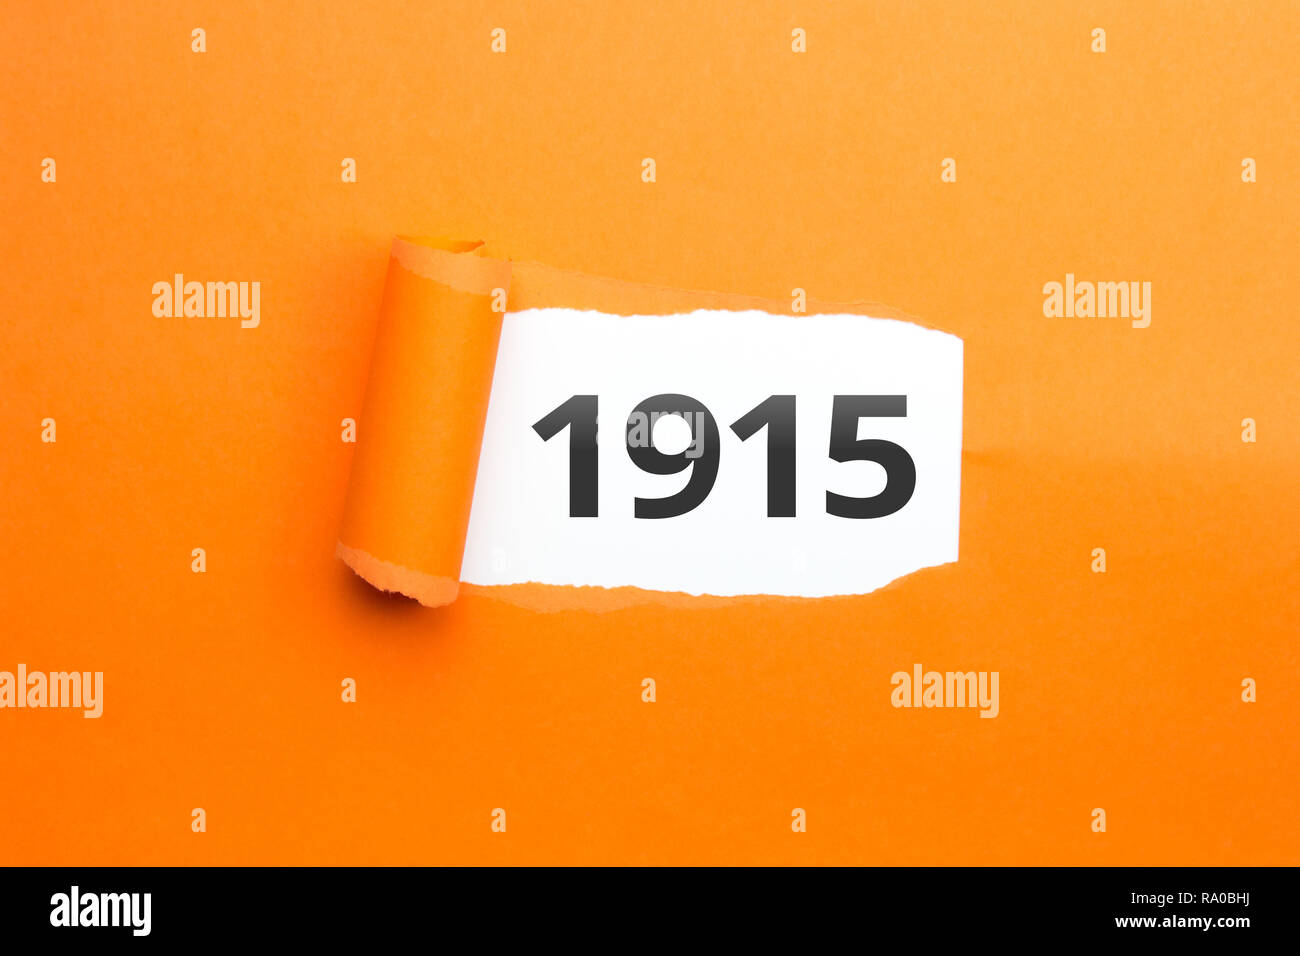 surprising Number / Year 1915 orange background Stock Photo